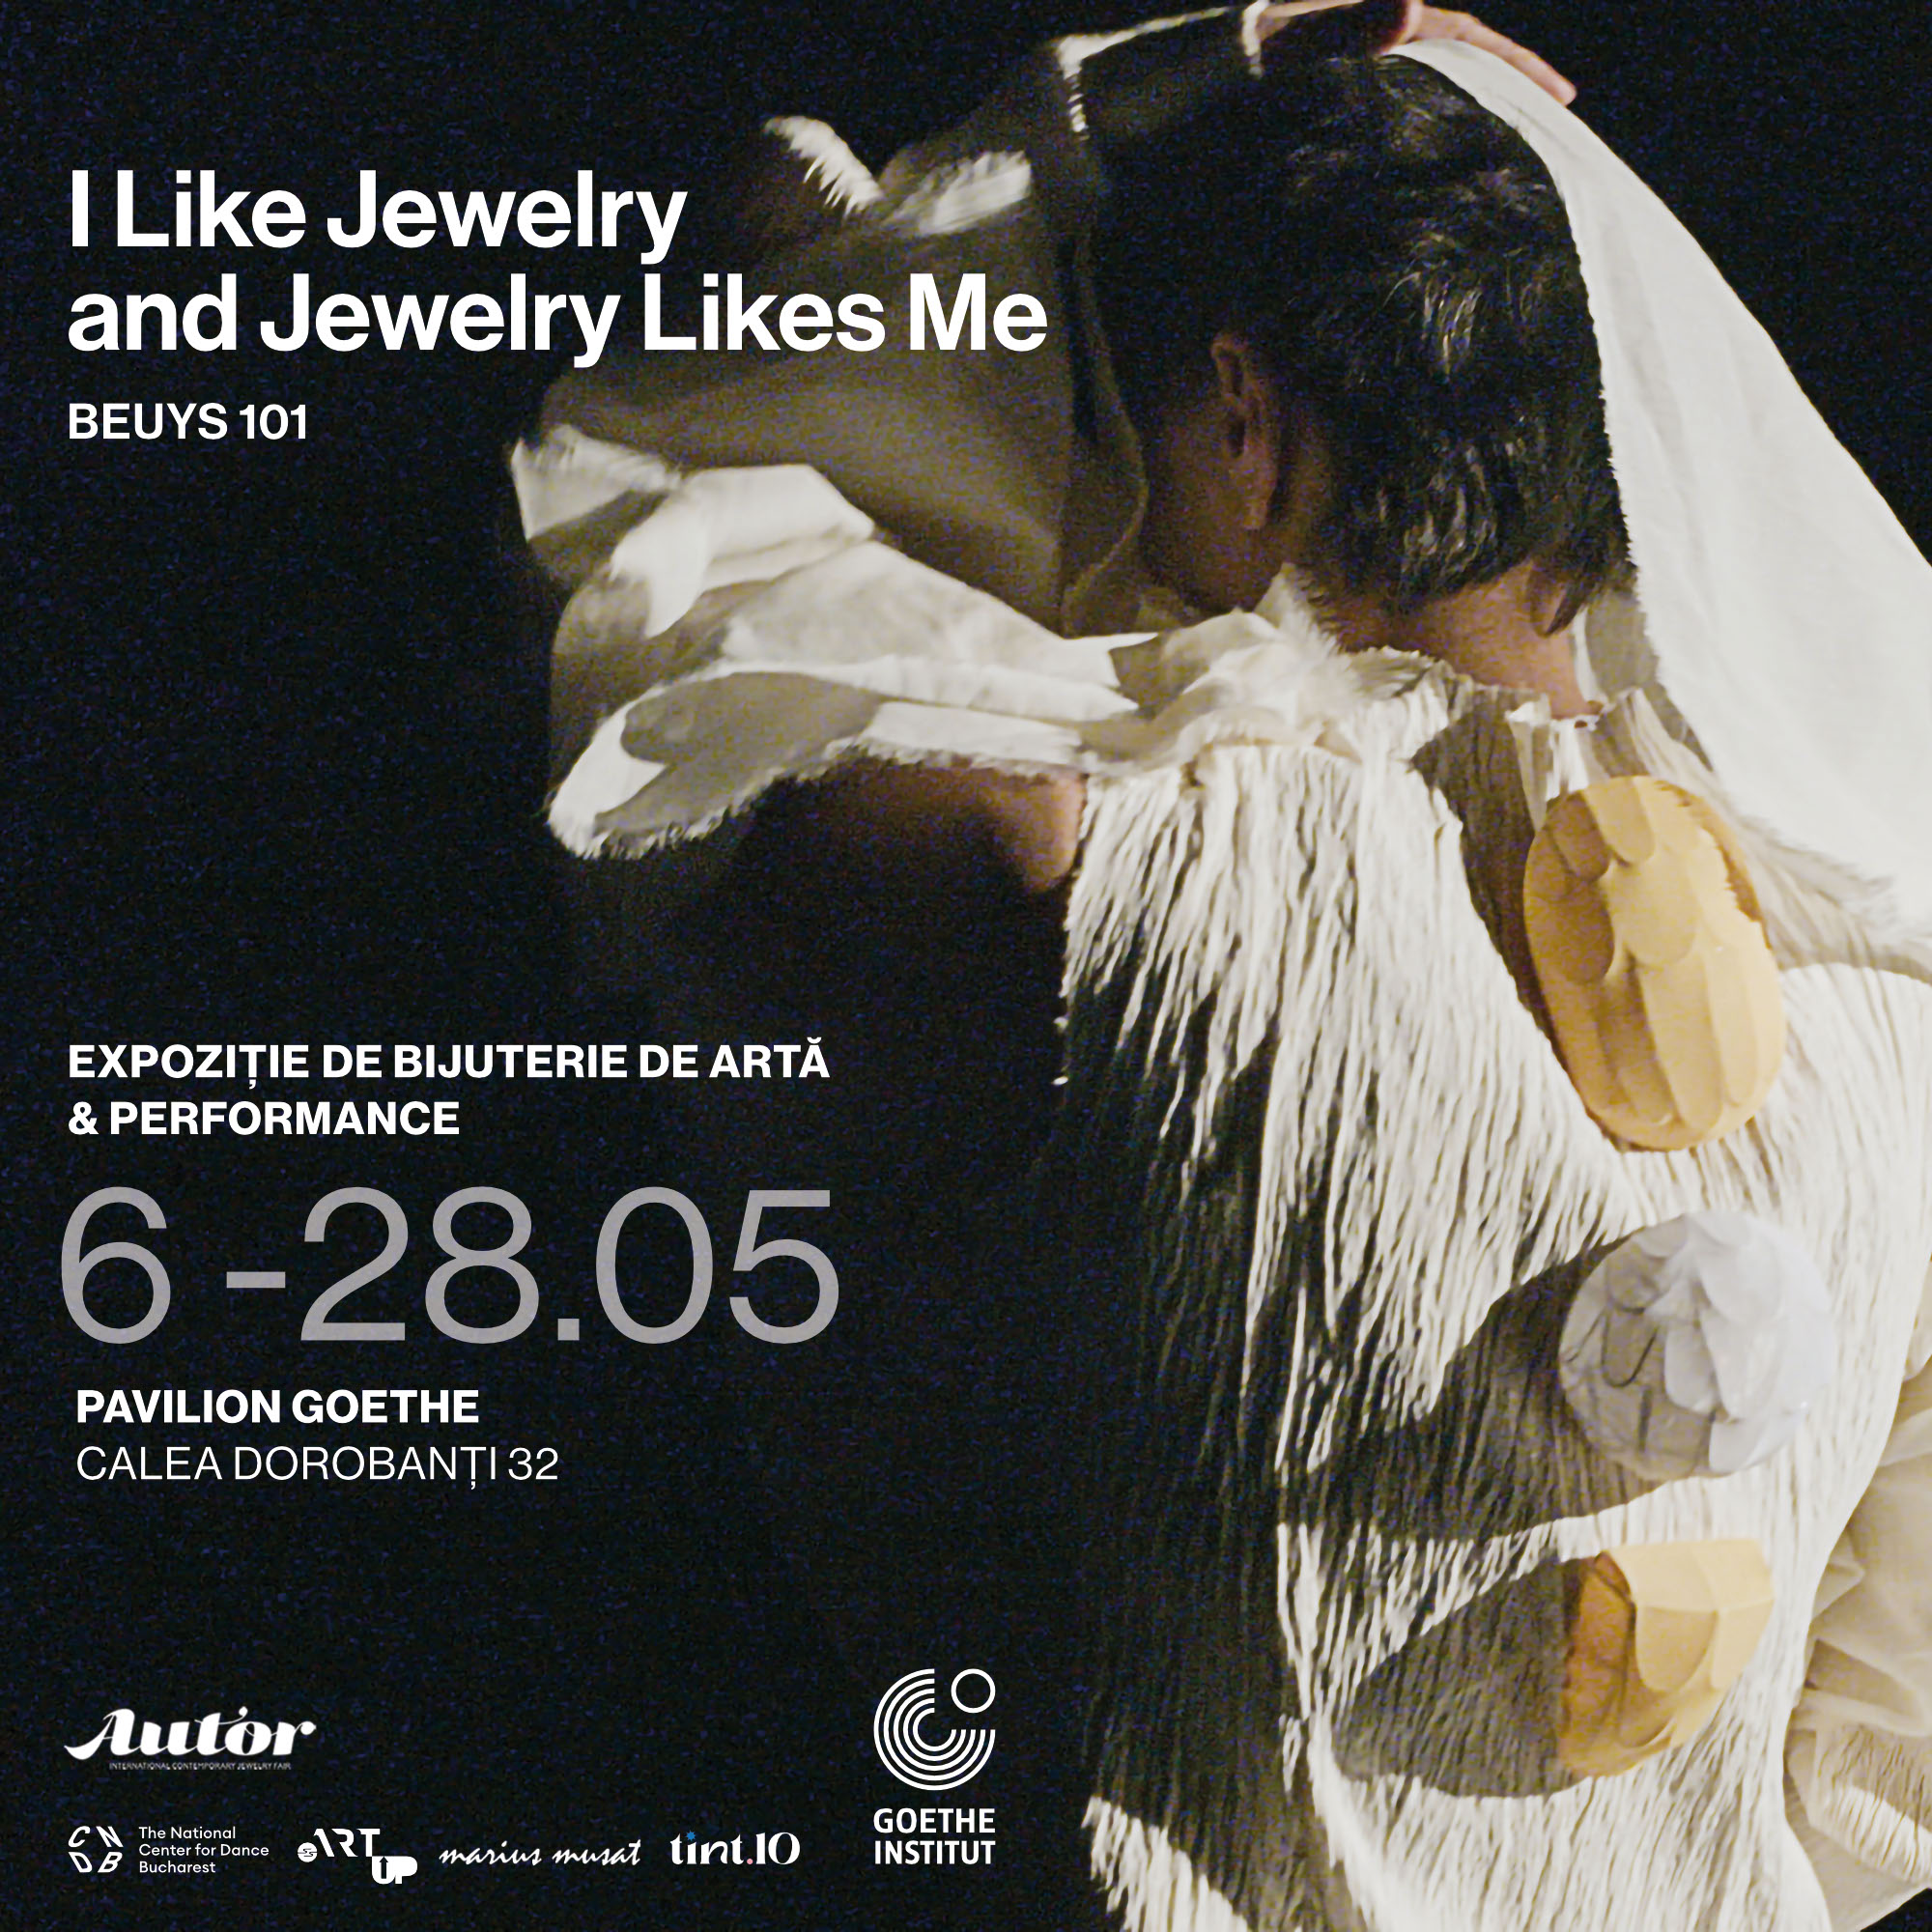 I like jewelry and jewelry like me Joseph Beuys